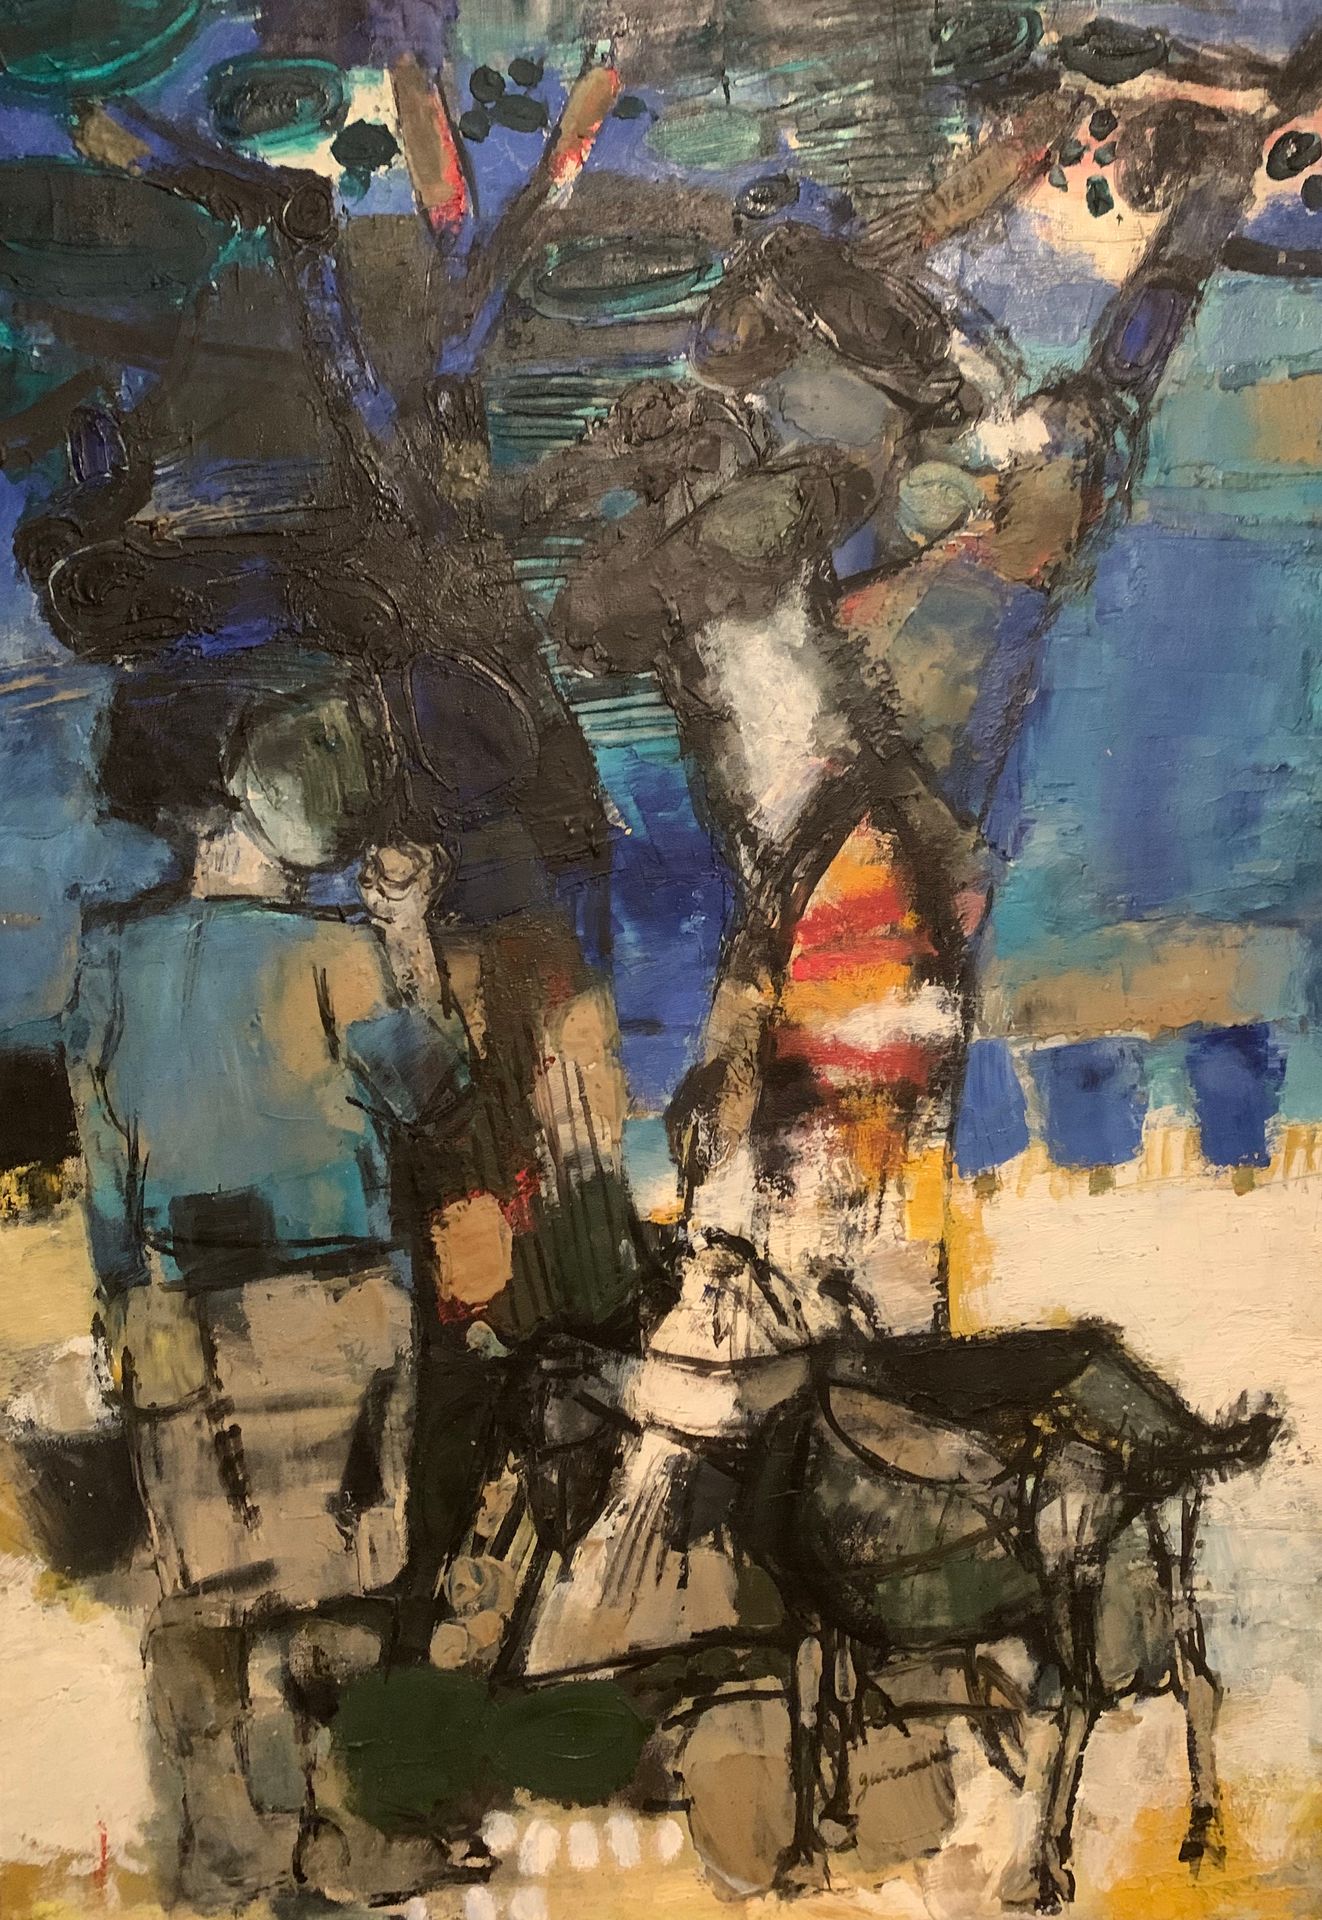 Null Paul GUIRAMAND (1926-2007)

驴子

布面油画，右下角有签名

92 x 65 cm